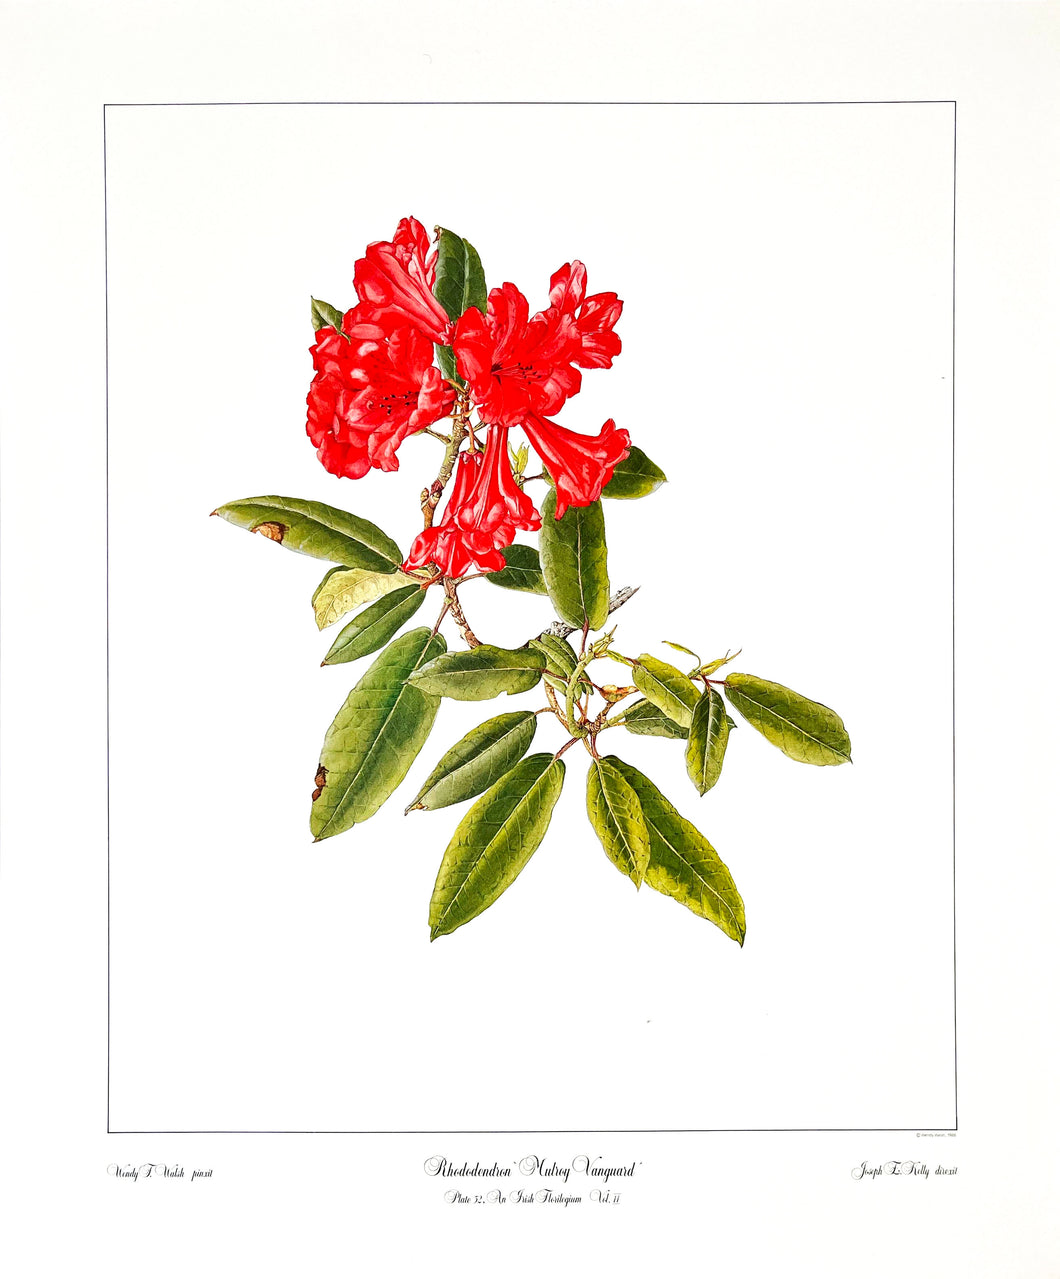 Rhododendron 'Mulroy Vanguard'